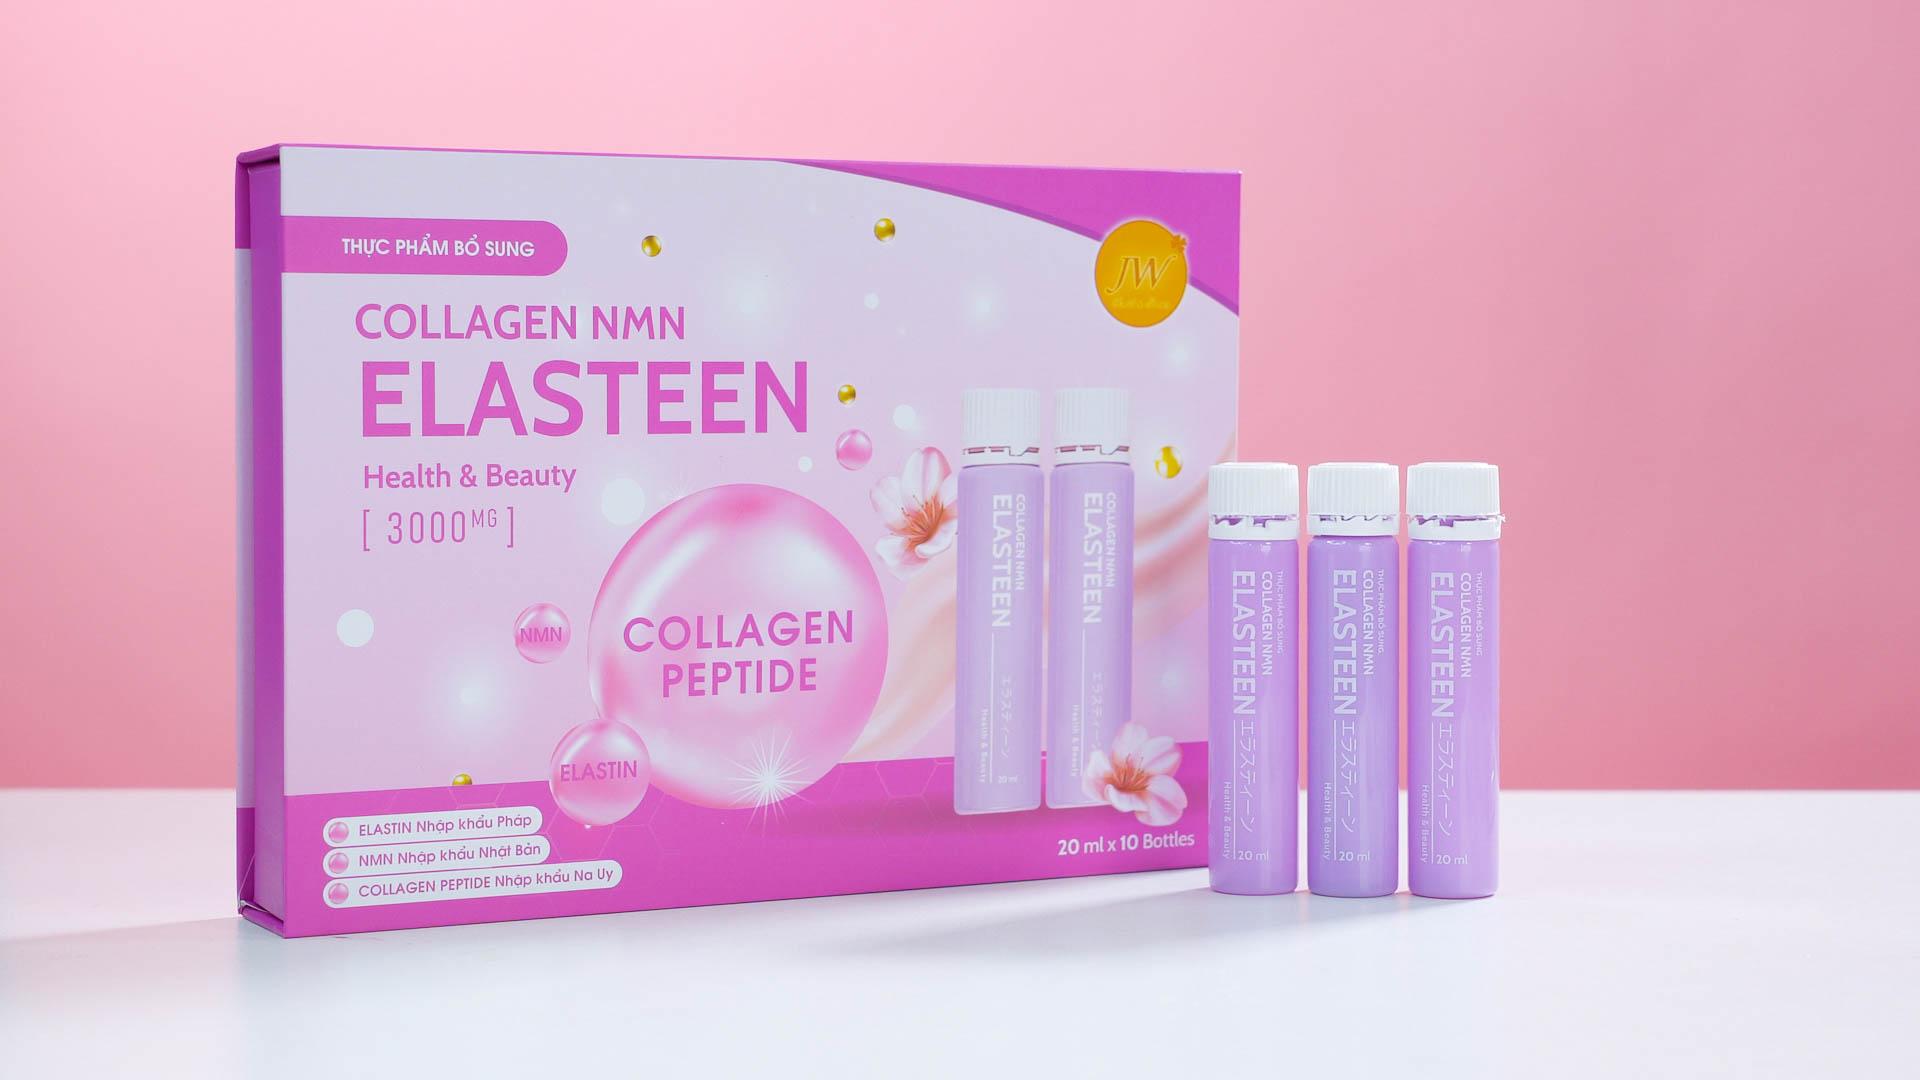 Collagen NMN Elasteen - Giải pháp hỗ trợ làm đẹp da an toàn cho phụ nữ Việt - 3